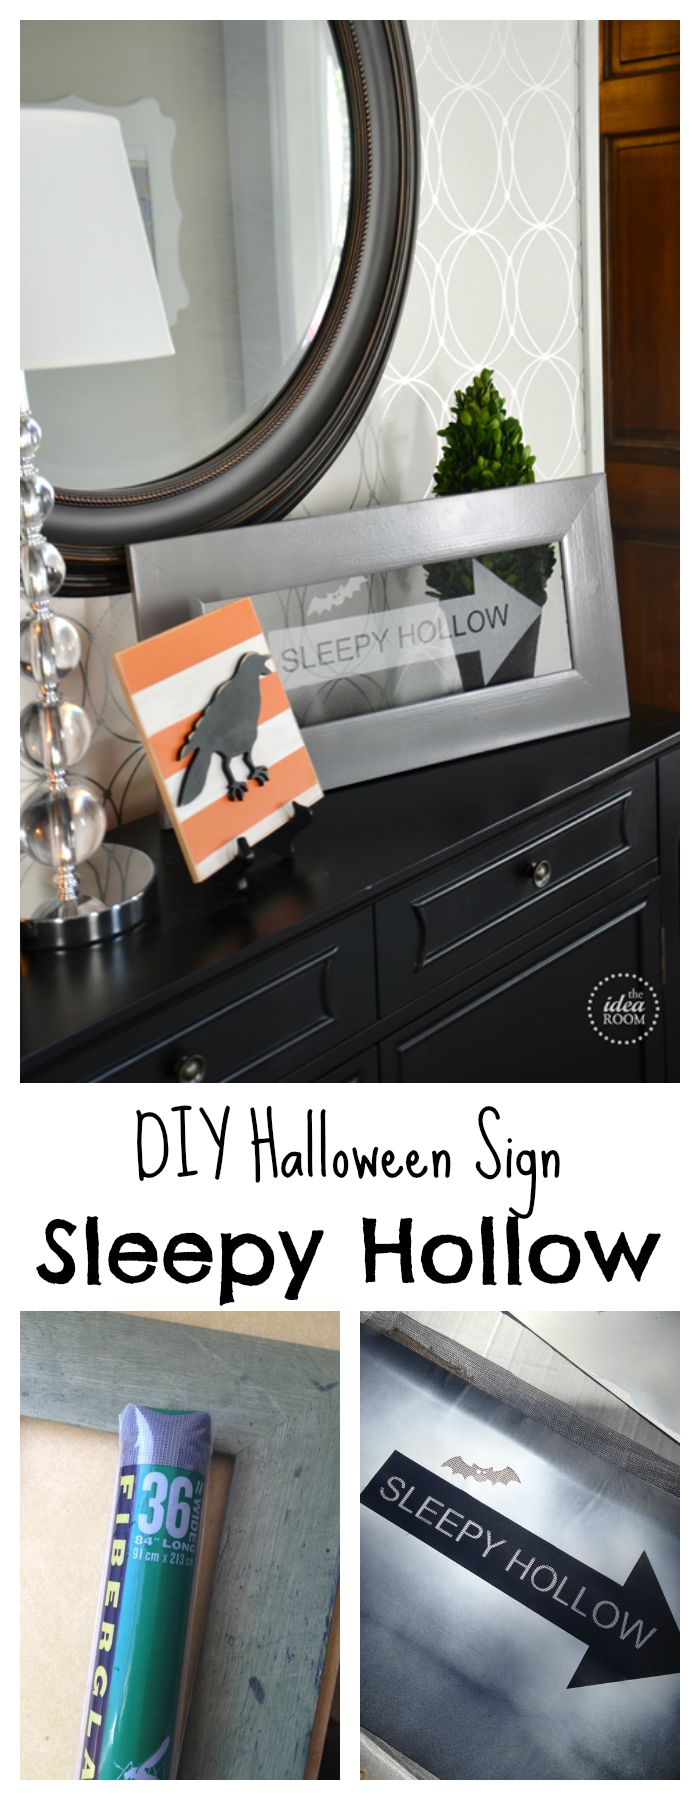 Halloween-Sleepy-Hollow-Sign-Decoration